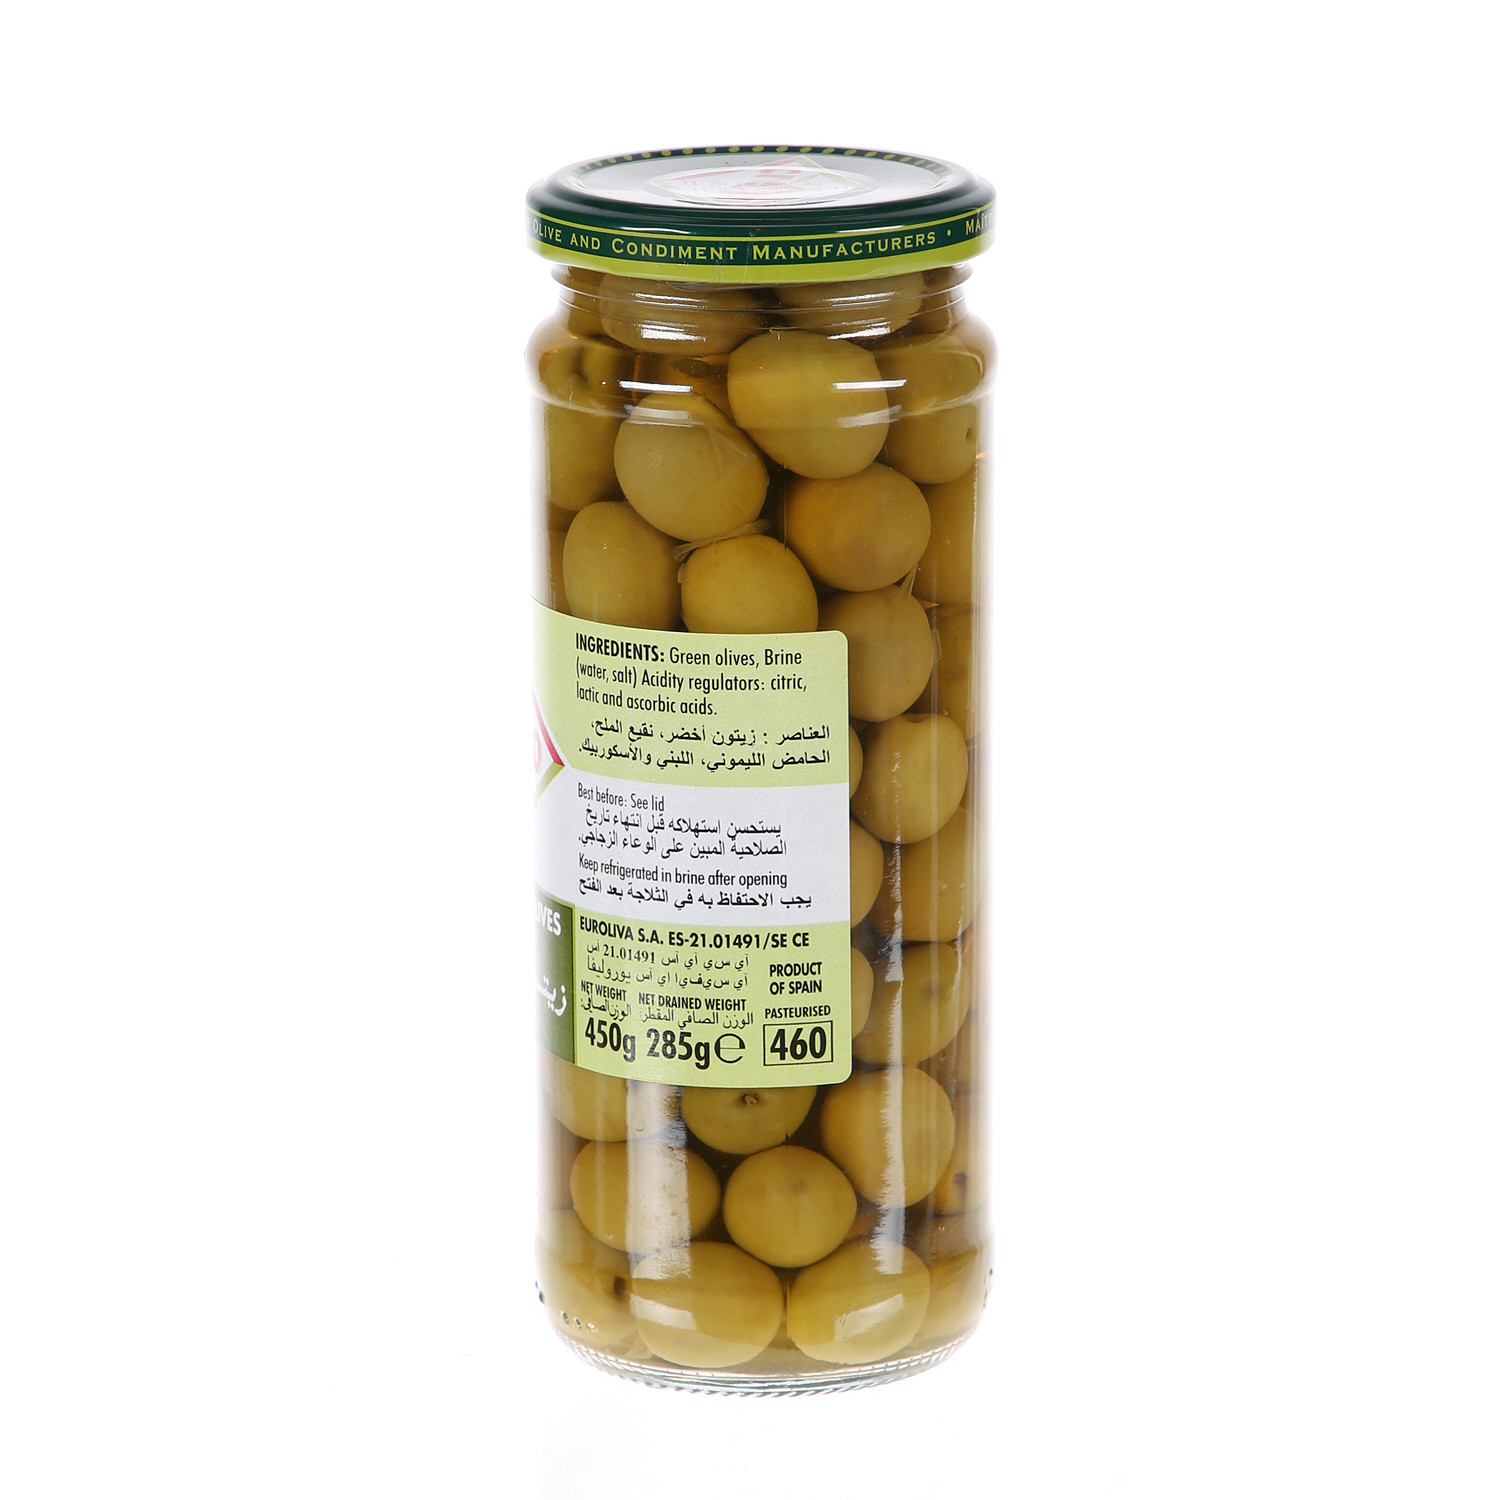 Crespo Whole Green Olives Jar 450 g